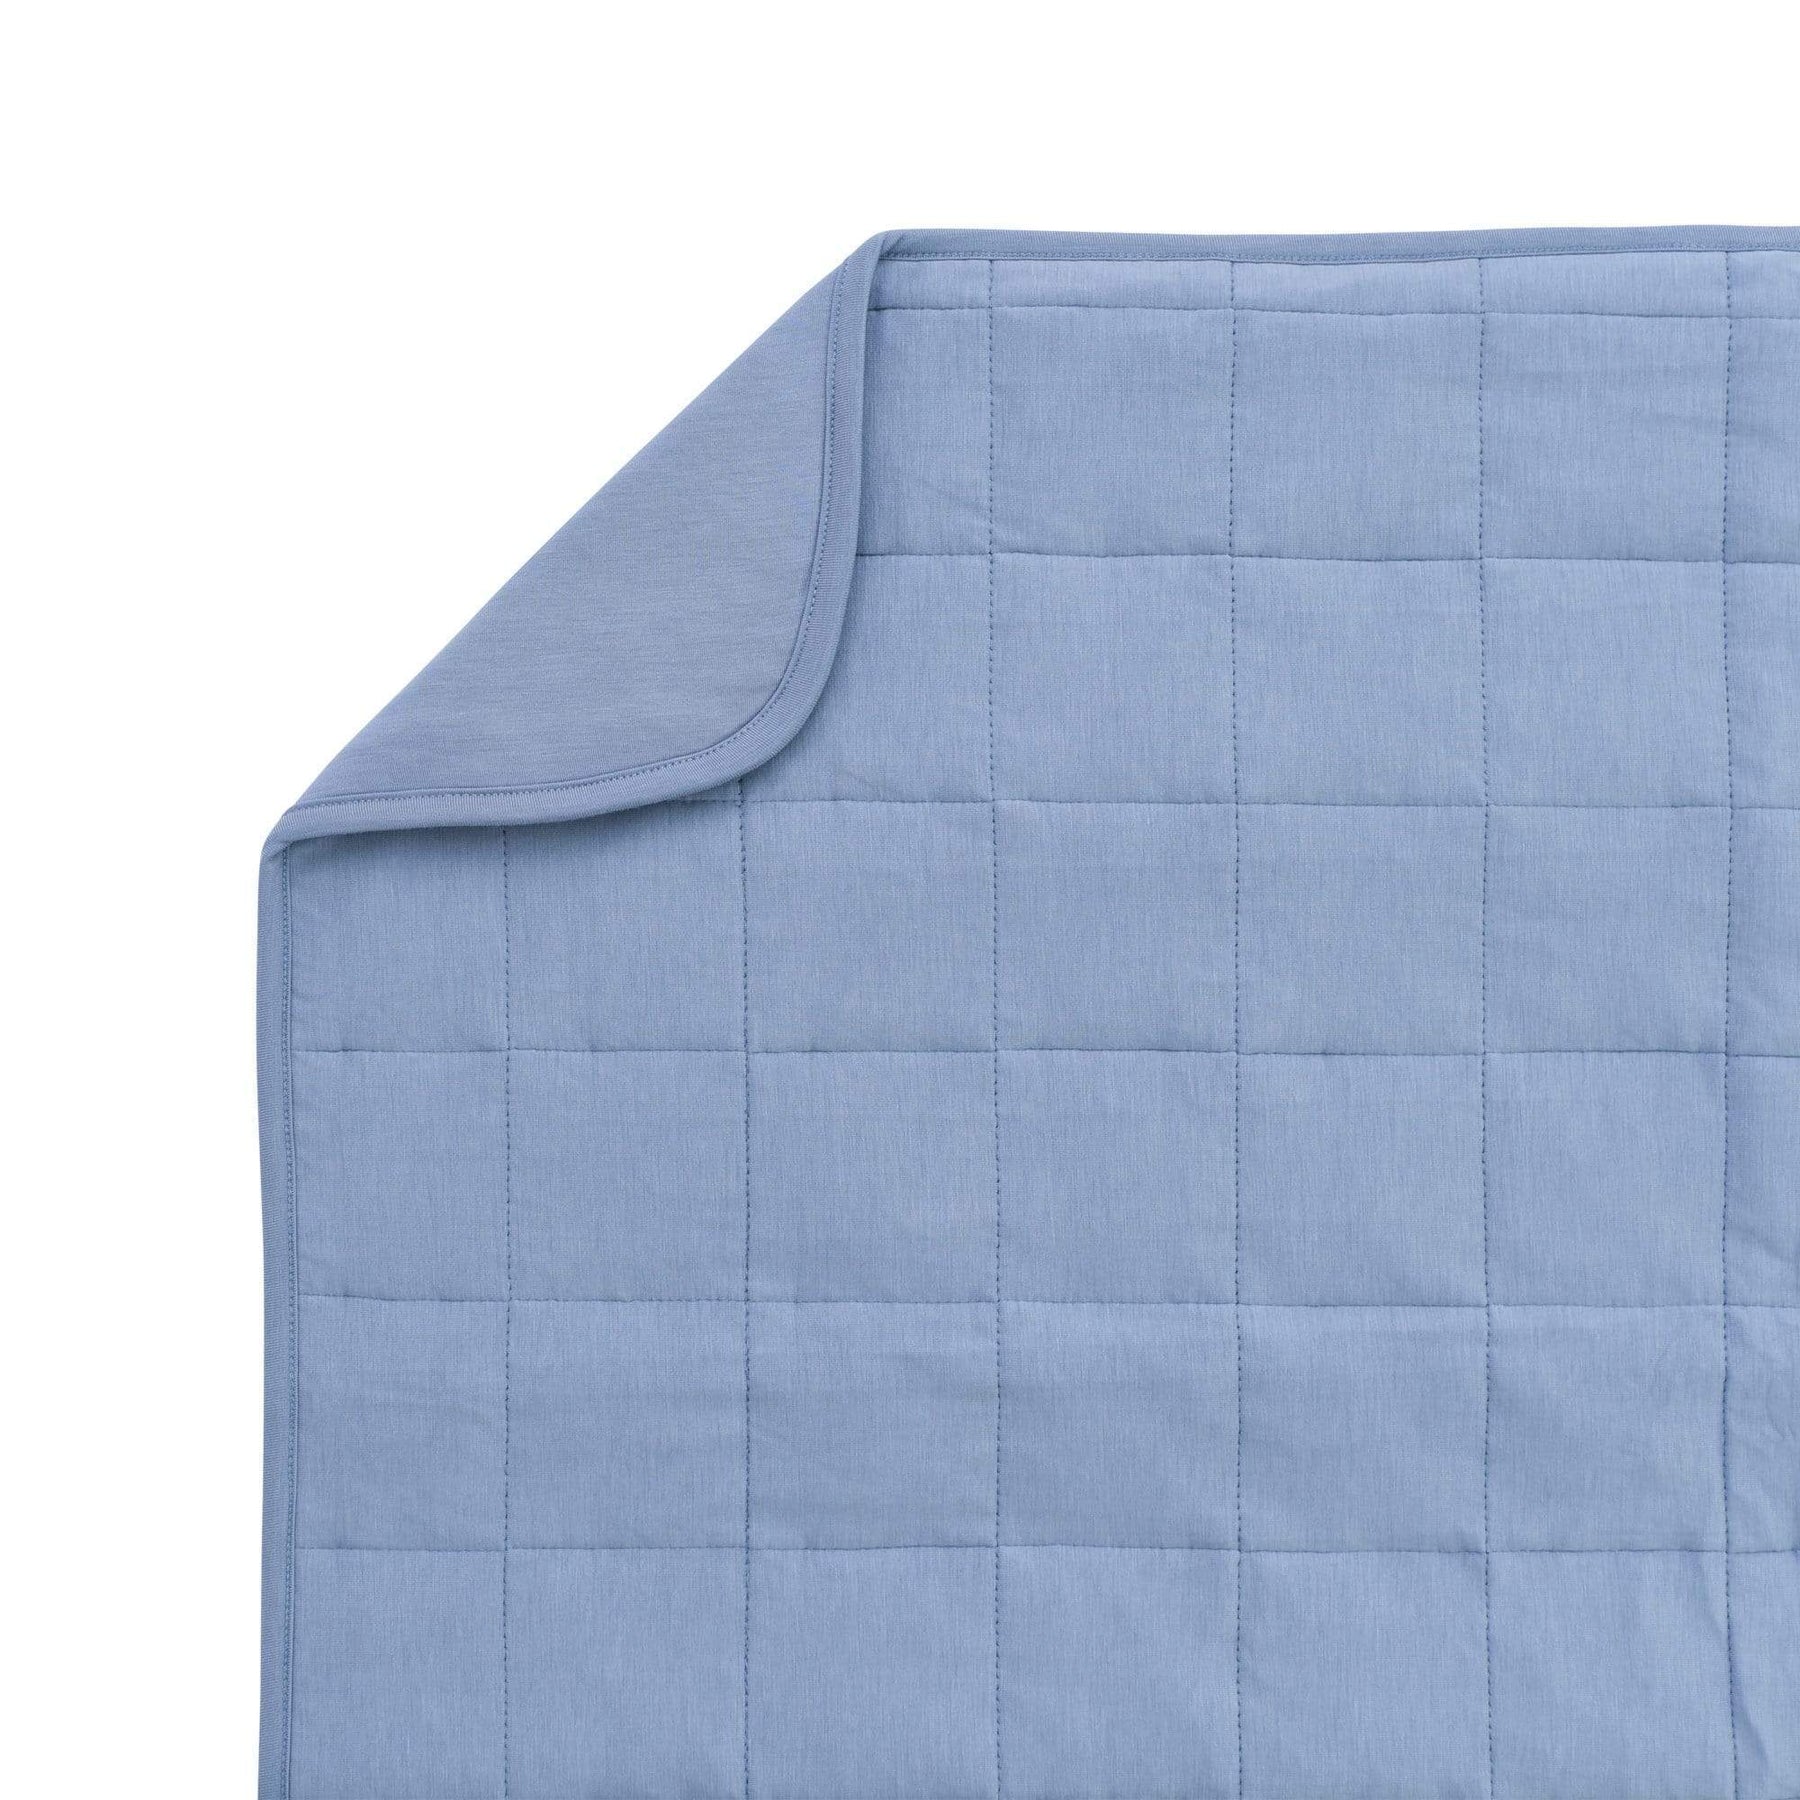 Kyte BABY Blanket Slate / Adult / 2.5 Tog Adult Quilted Blanket in Slate